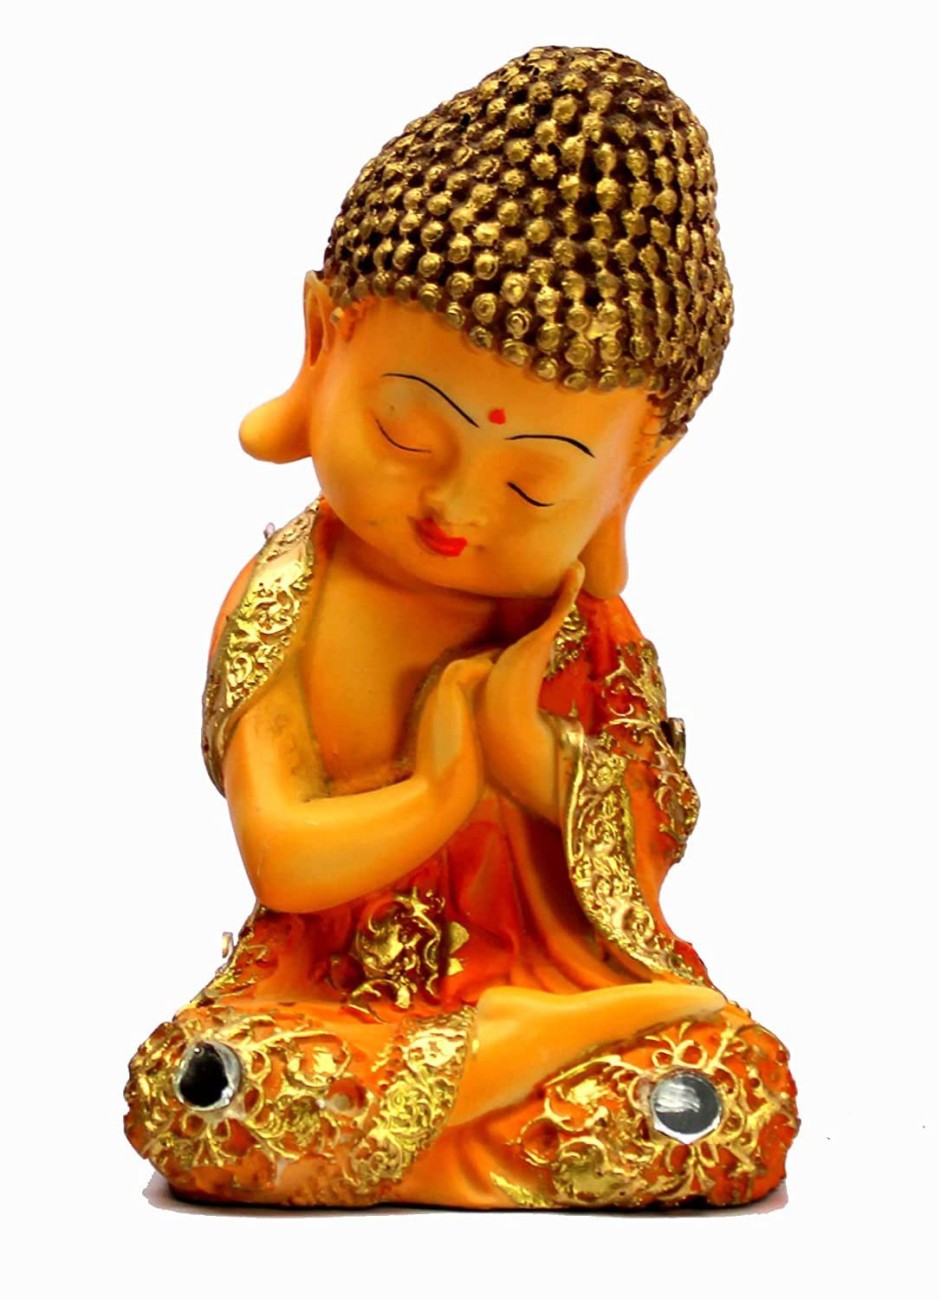 eSplanade Smiling Happy Baby Buddha Monk Statue Feng Shui Figurine